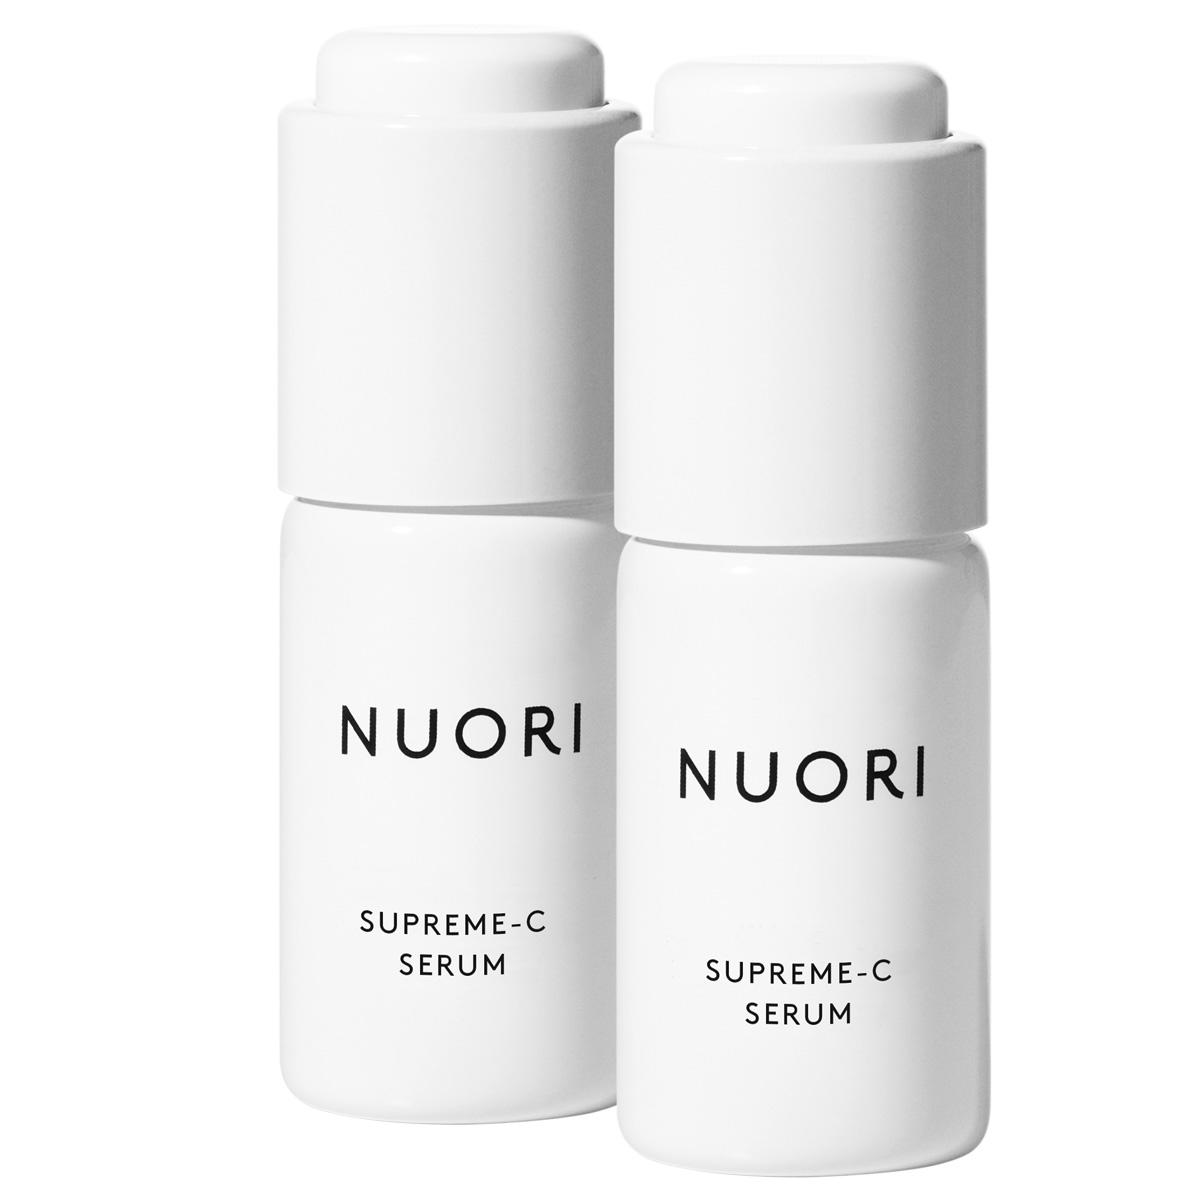 NUORI Supreme-C Serum 2 x 10 ml - 1